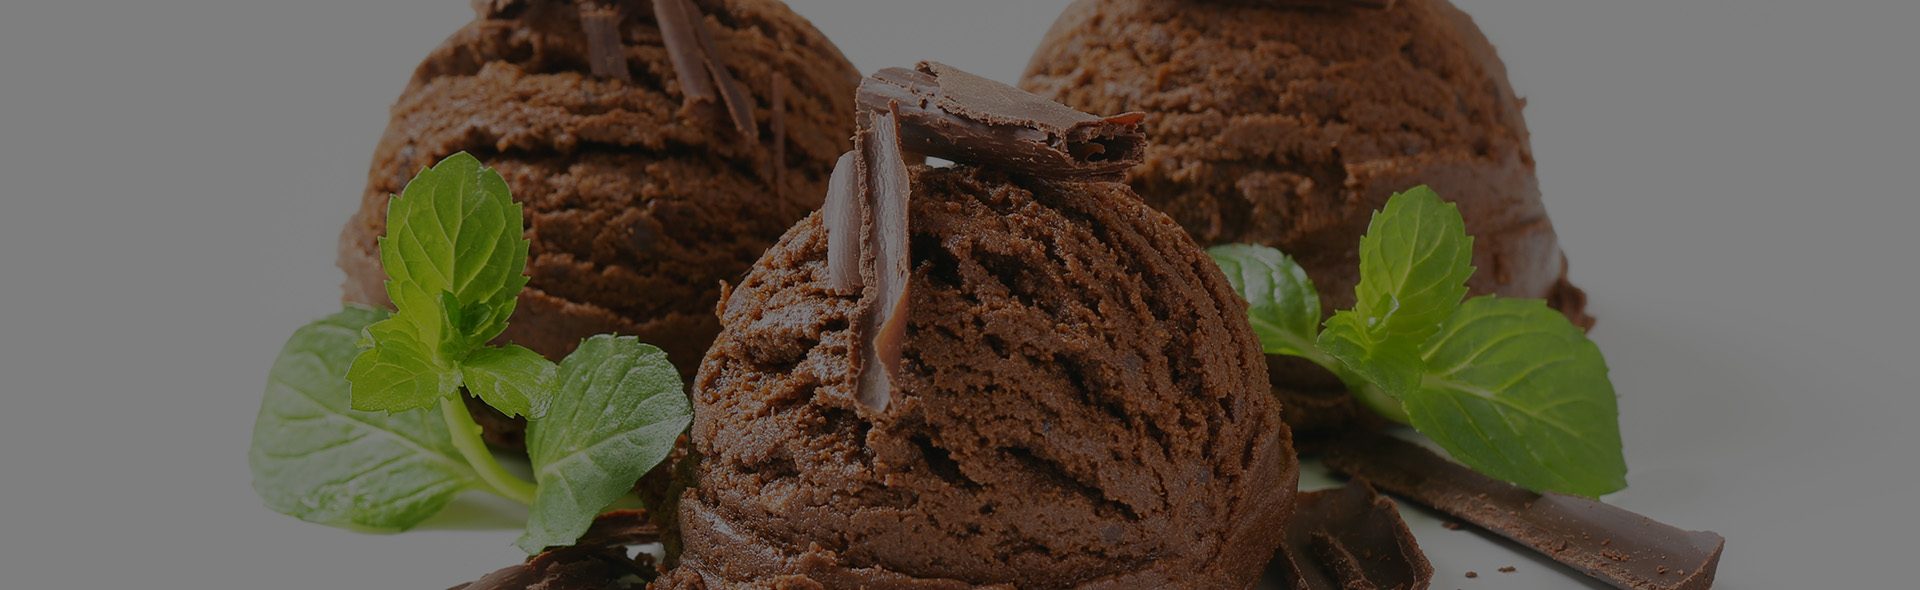 Chocolate Ice Cream Banner